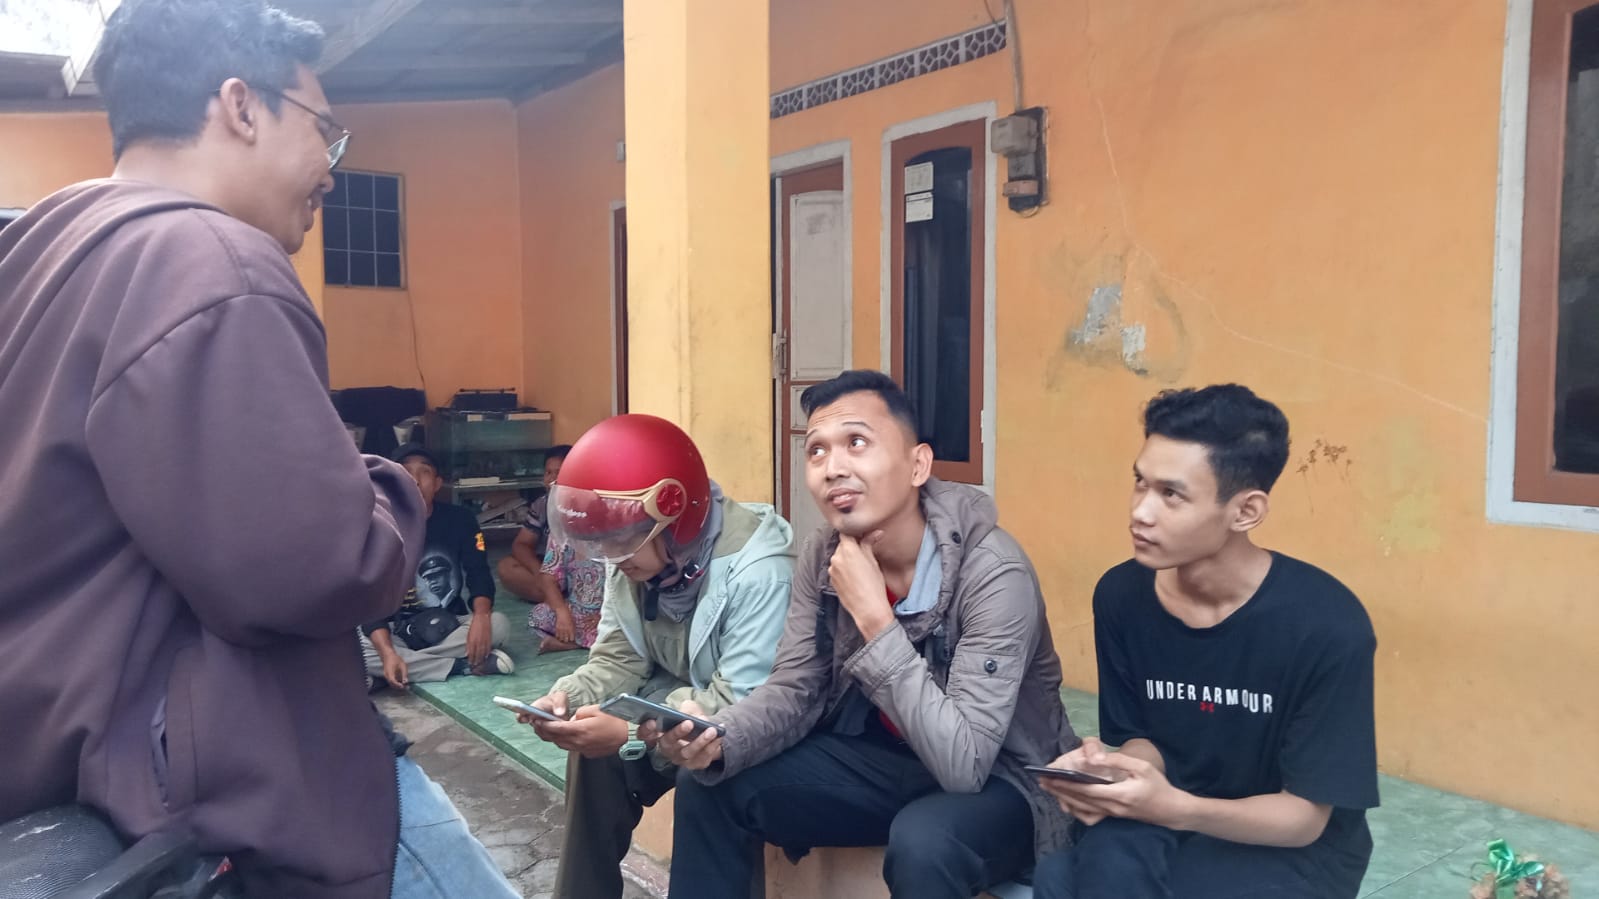 Fikriansyah Pemuda Cirebon yang Dituduh Sebagai Hacker Bjorka Mengaku Akun Instagramnya Sempat Dihack